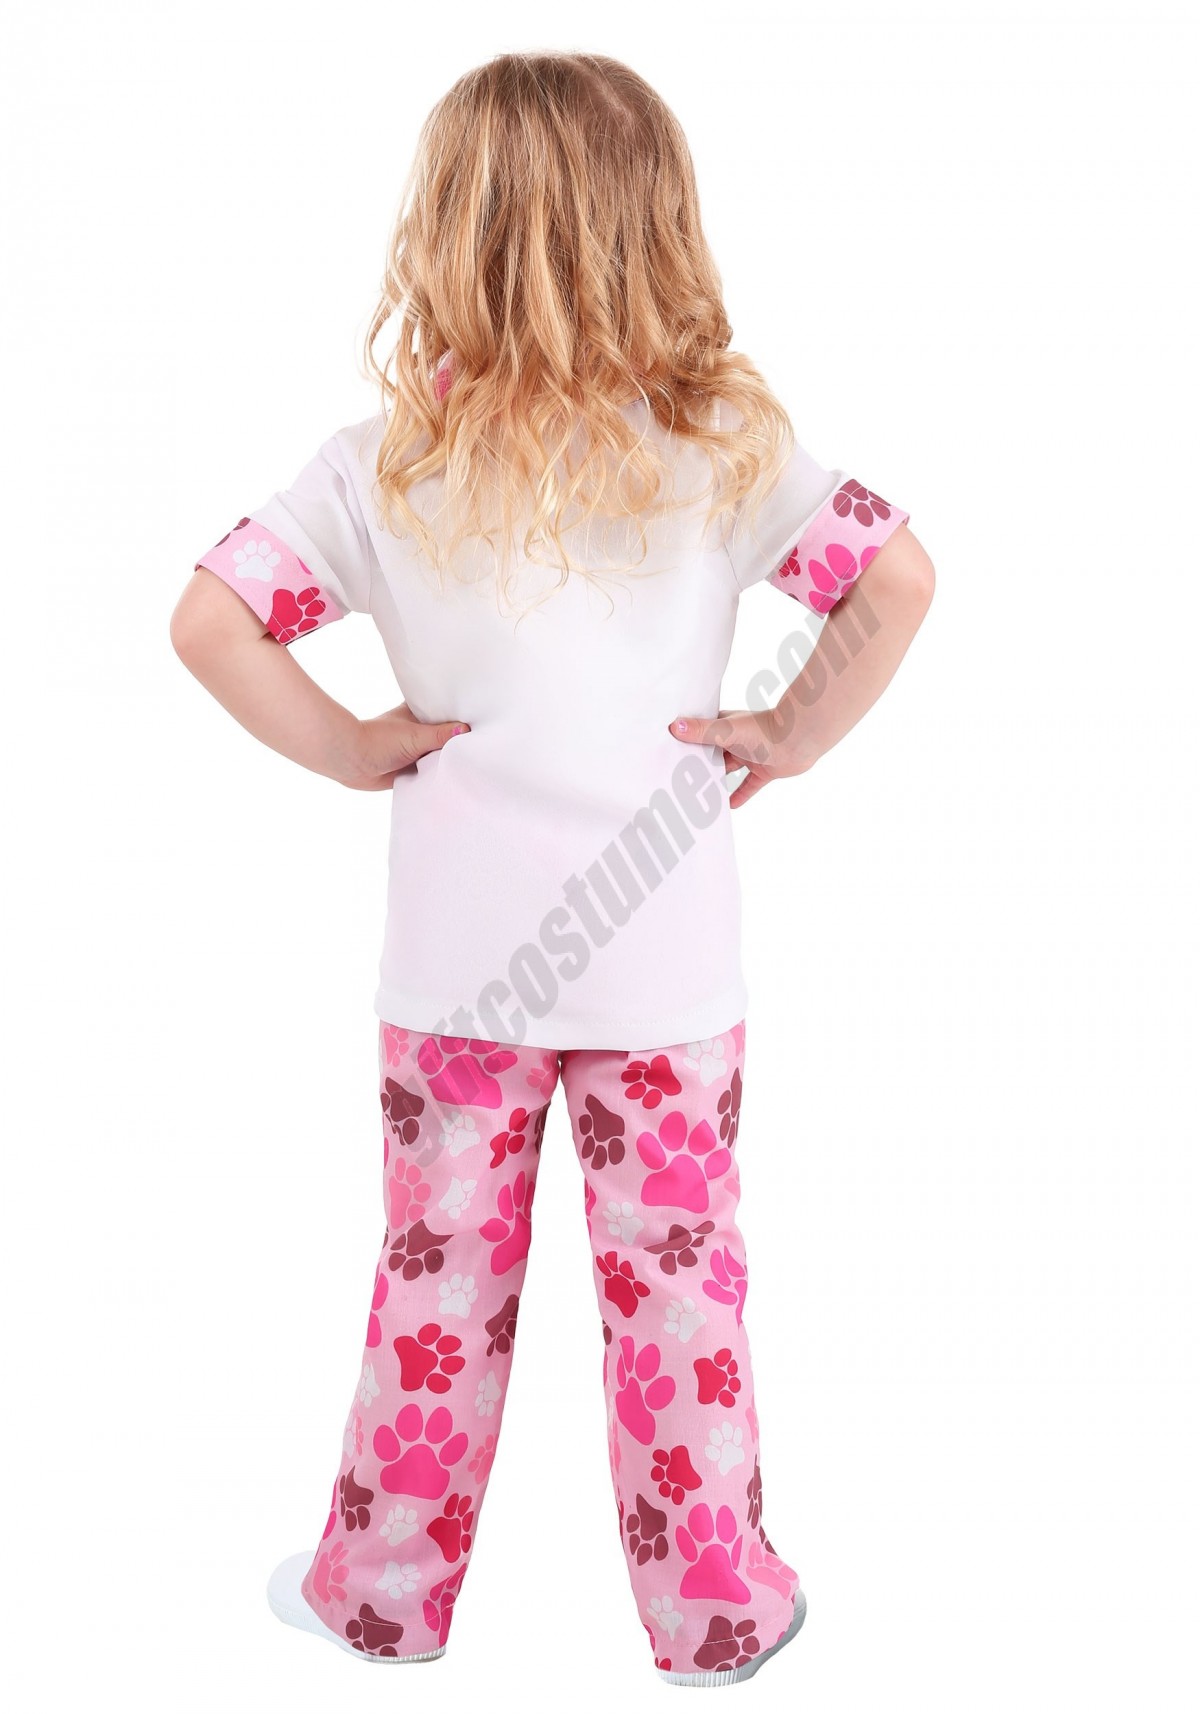 Toddler Veterinarian Costume for Girls Promotions - -1